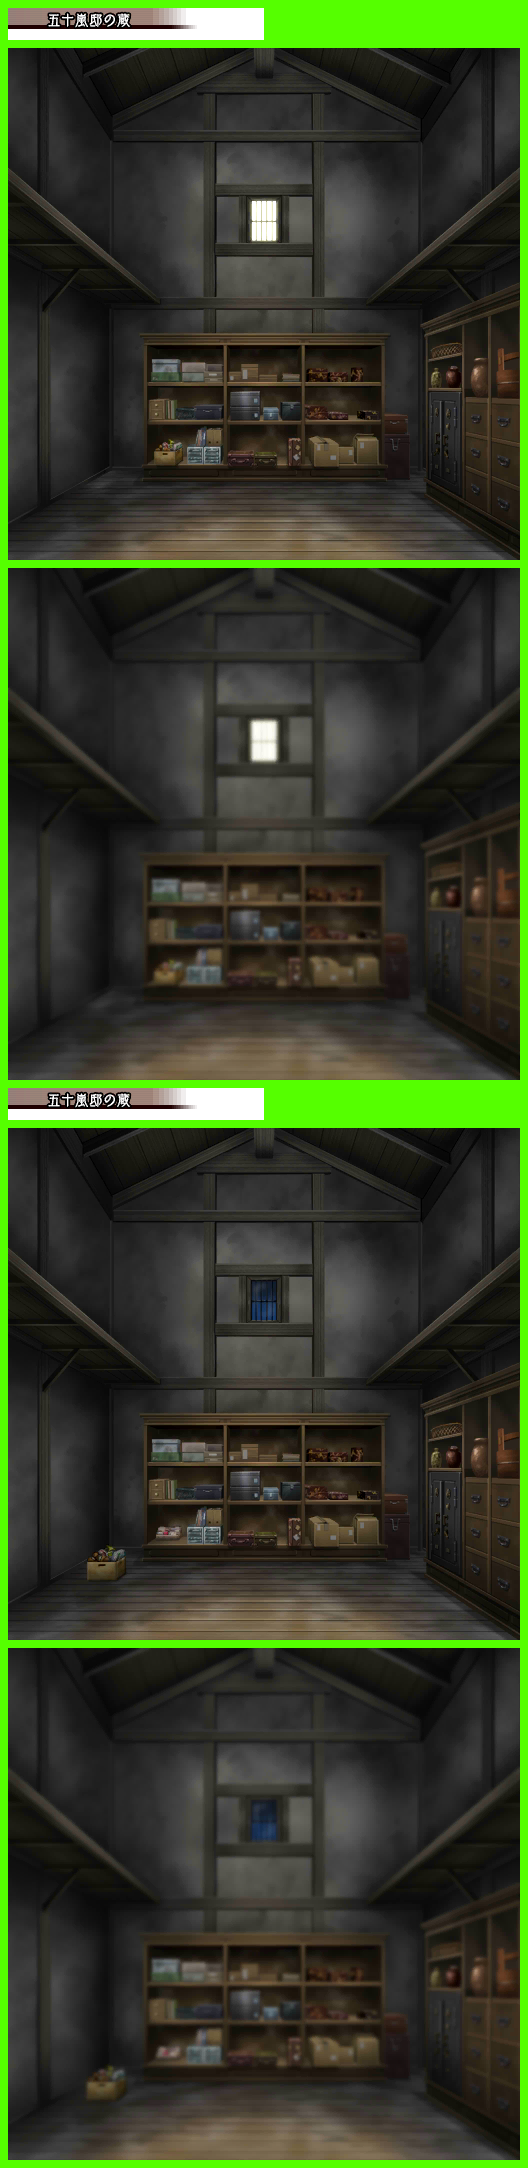 Detective Conan: Phantom Rhapsody - Igarashi Residence Storage